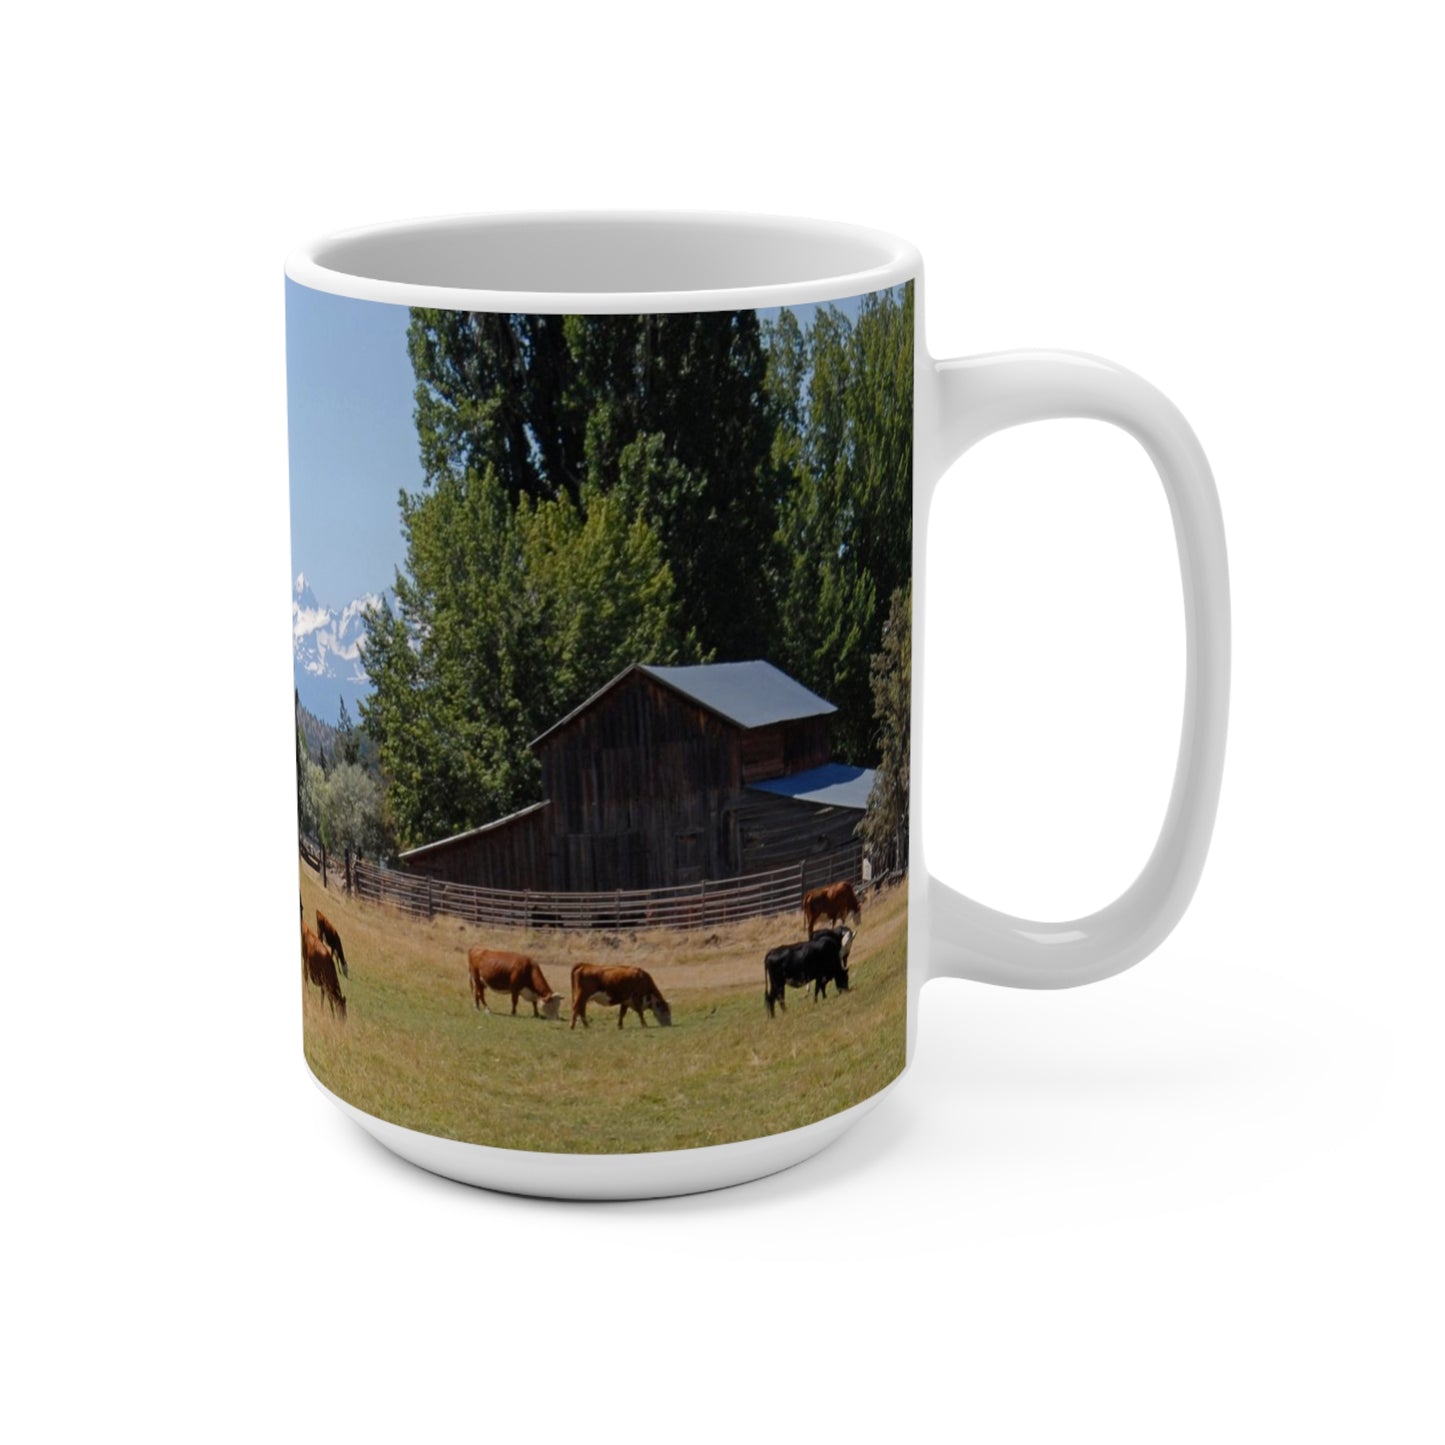 Picturesque Cattle Mug 15oz